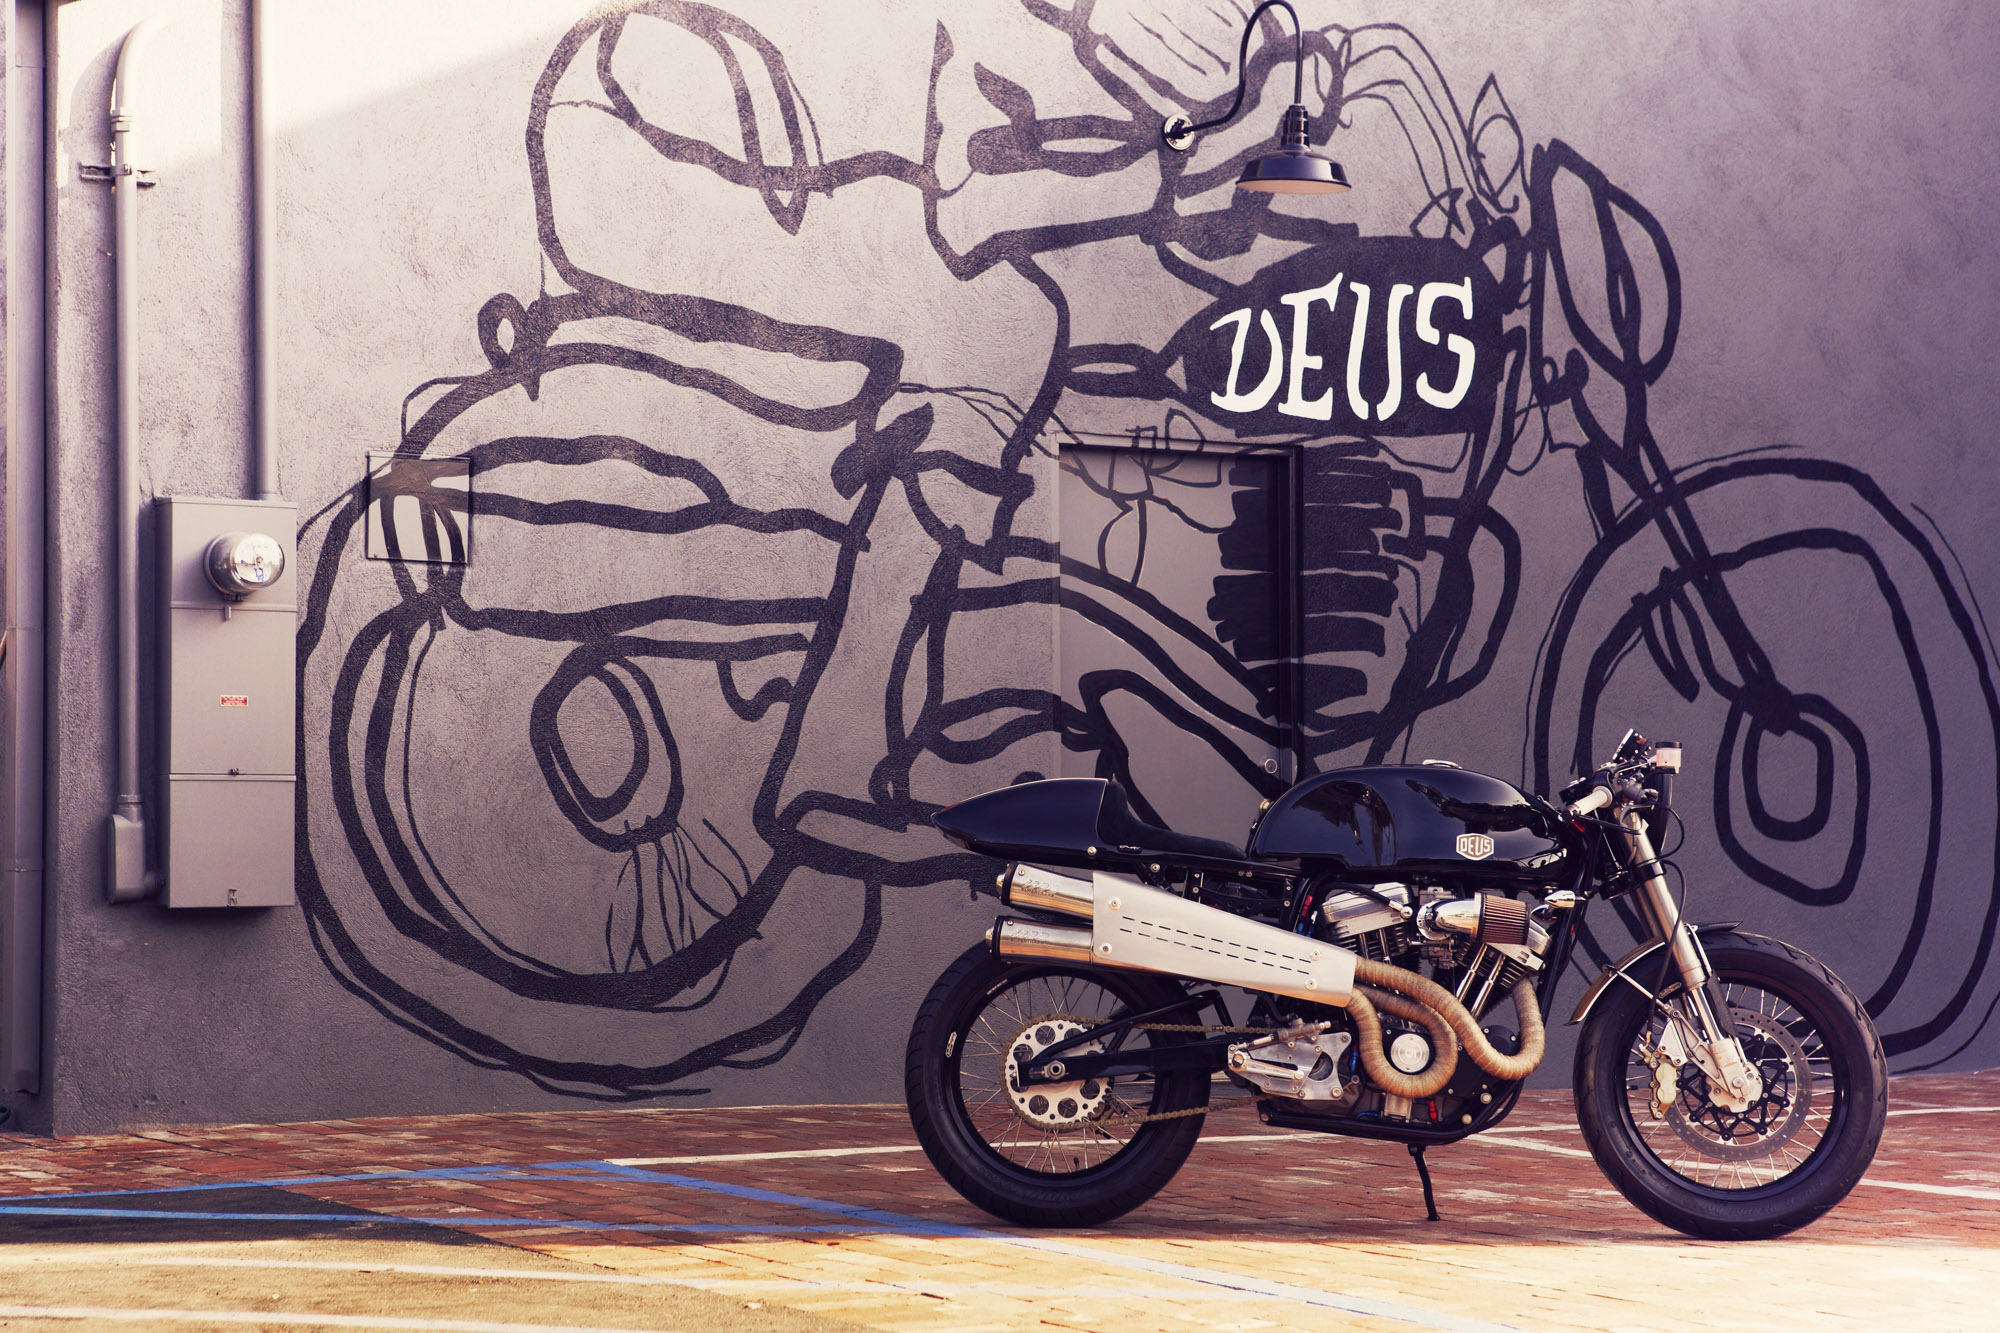 deus ex machina wallpaper,motor vehicle,motorcycle,vehicle,wall,street art